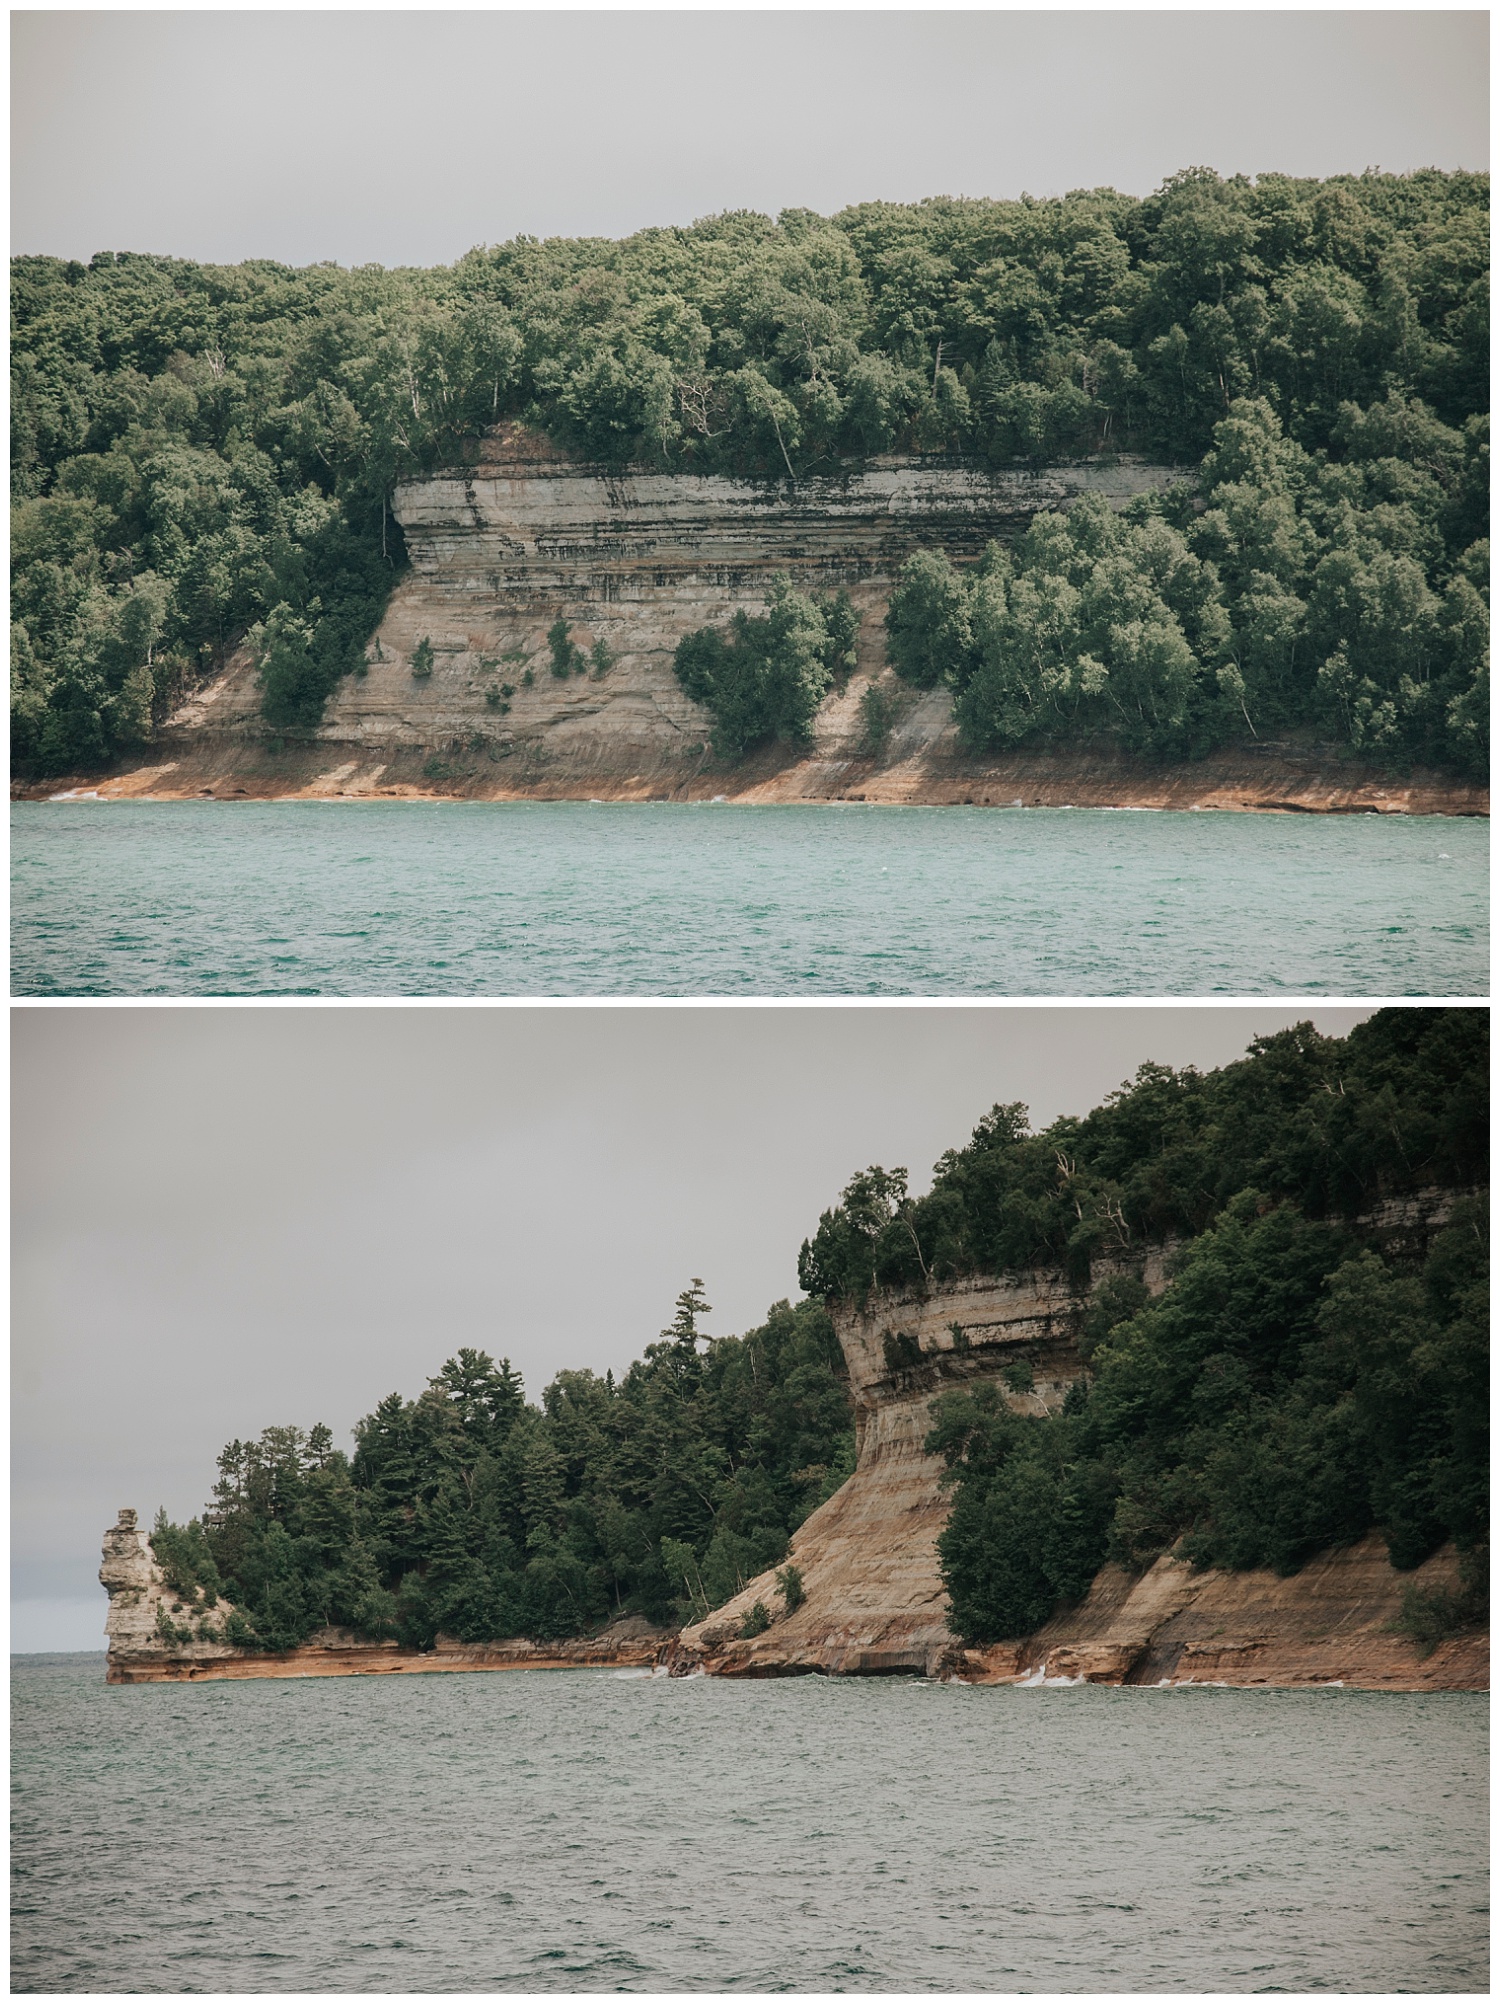  Boating near Munising, Michigan| Pictured Rocks National Lakeshore| Elopement Inspiration| Wild Onyx Photography 